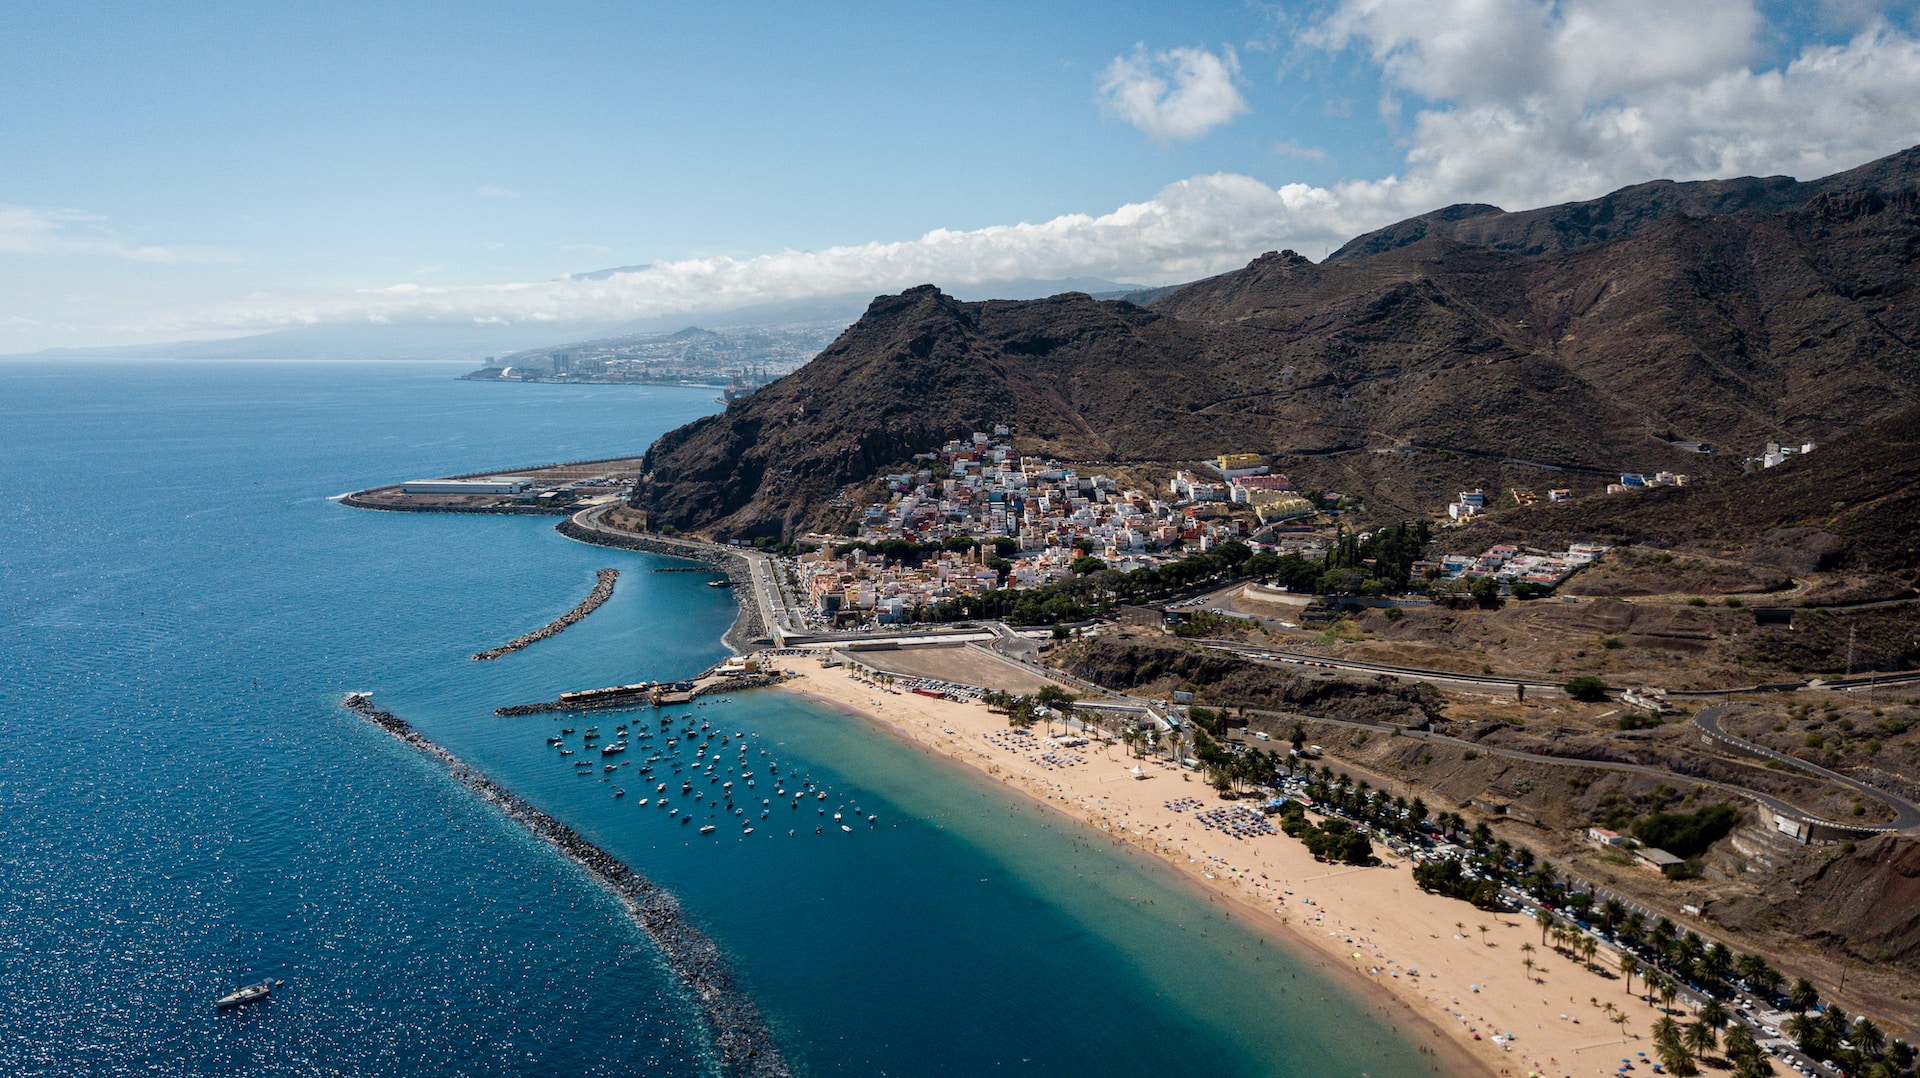 Vista aerea de la playa de San Andrés en Tenerife